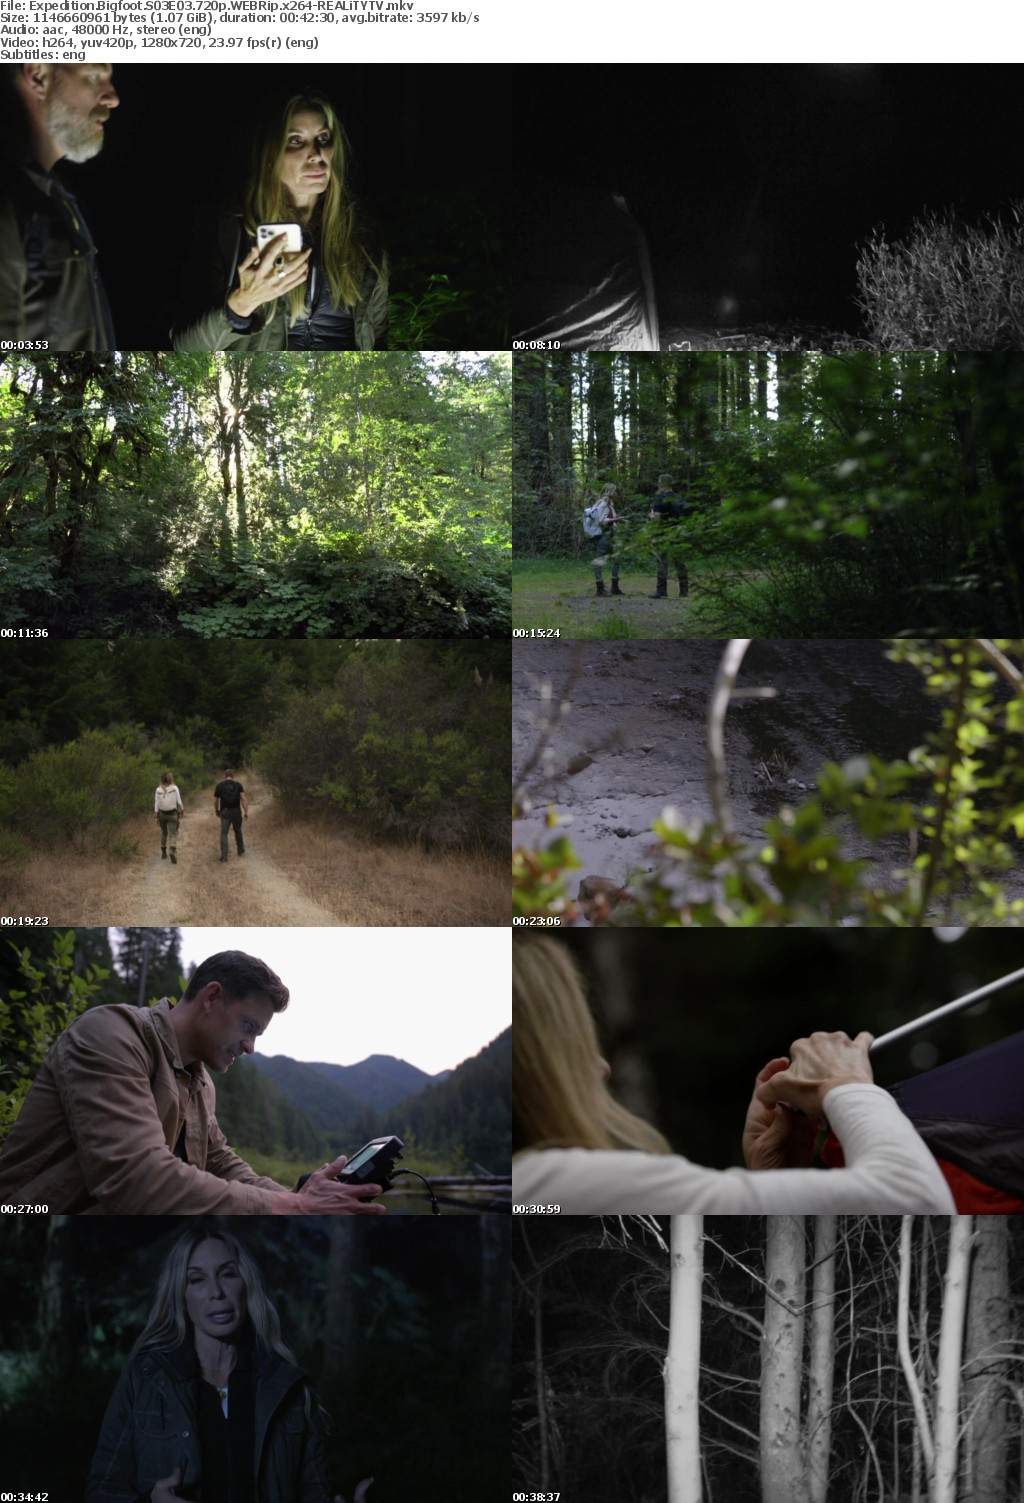 Expedition Bigfoot S03E03 720p WEBRip x264-REALiTYTV